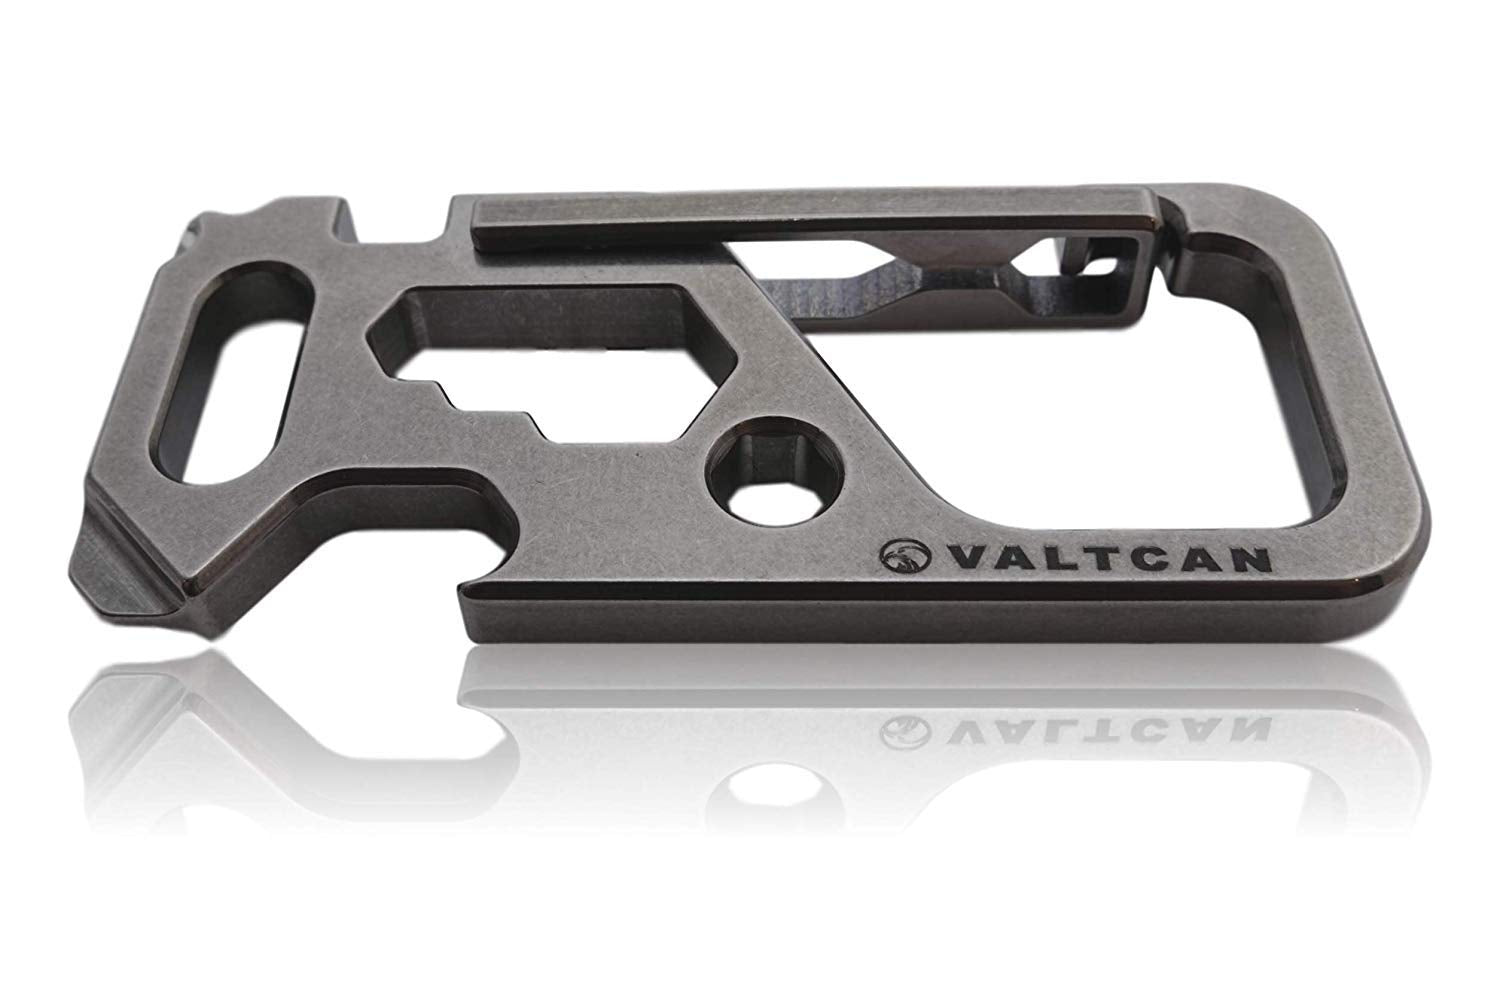 Titanium KeySnap combines a carabiner, keychain and blade